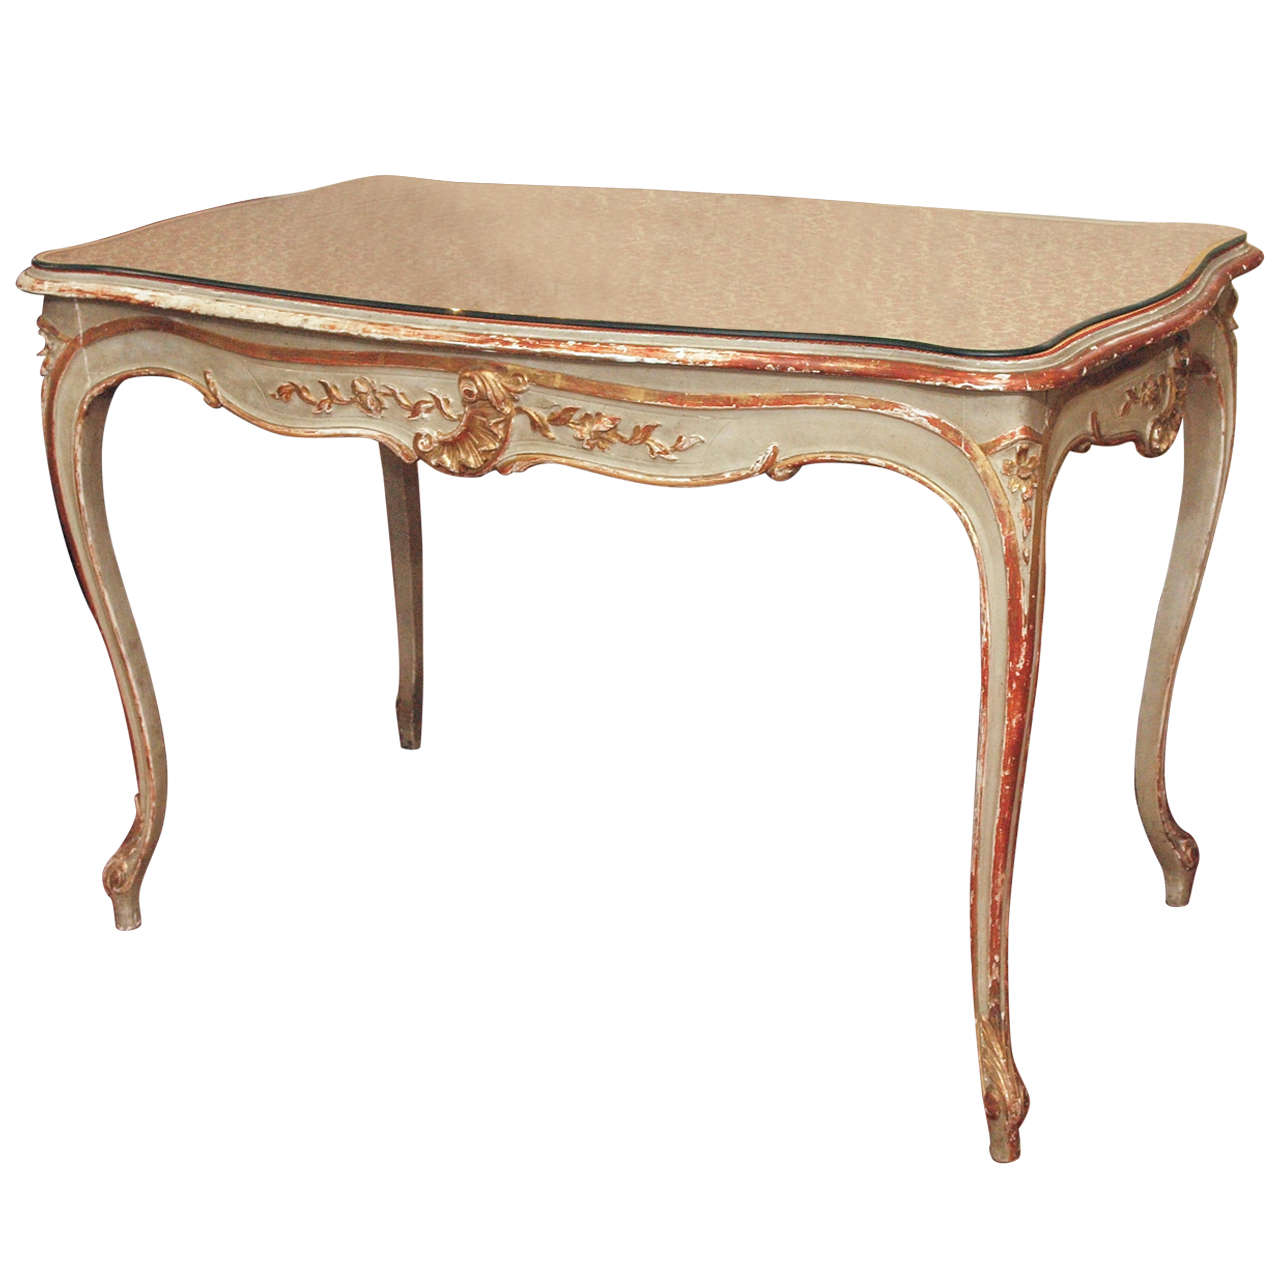 A Louis XV Style Table or Bureau Plat